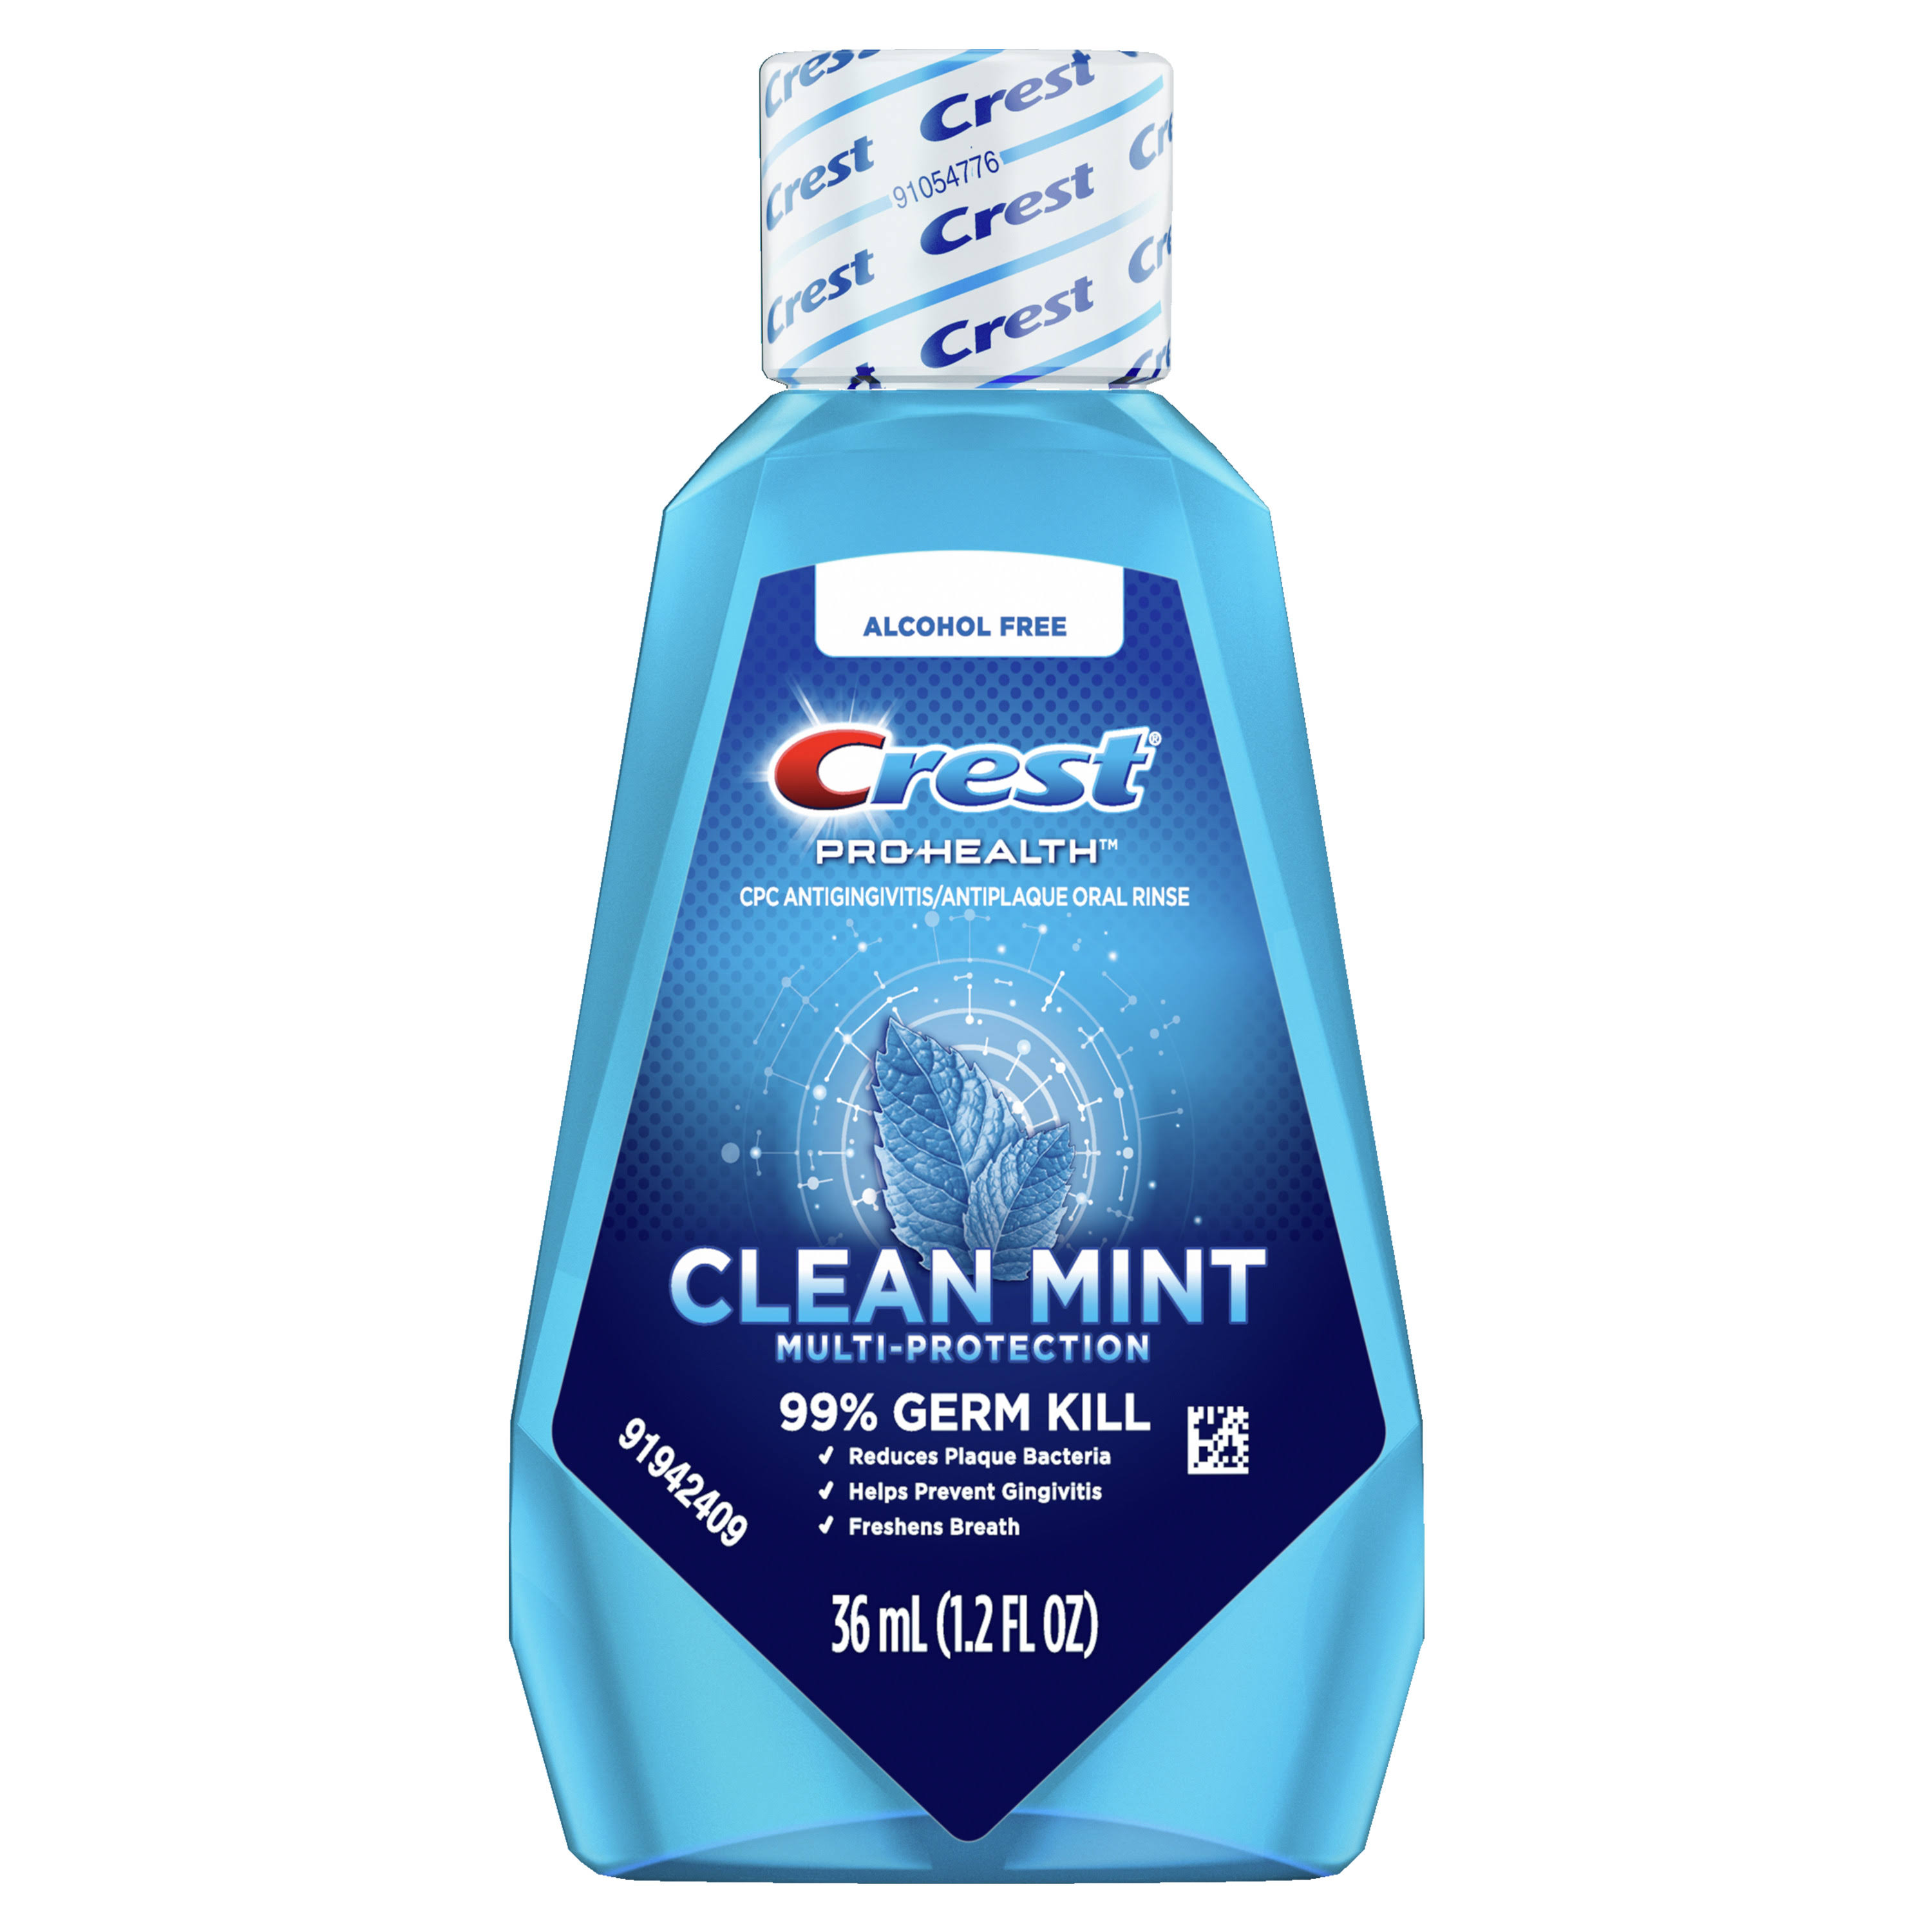 Crest Pro-Health Mouthwash - Refreshing Clean Mint, 36ml